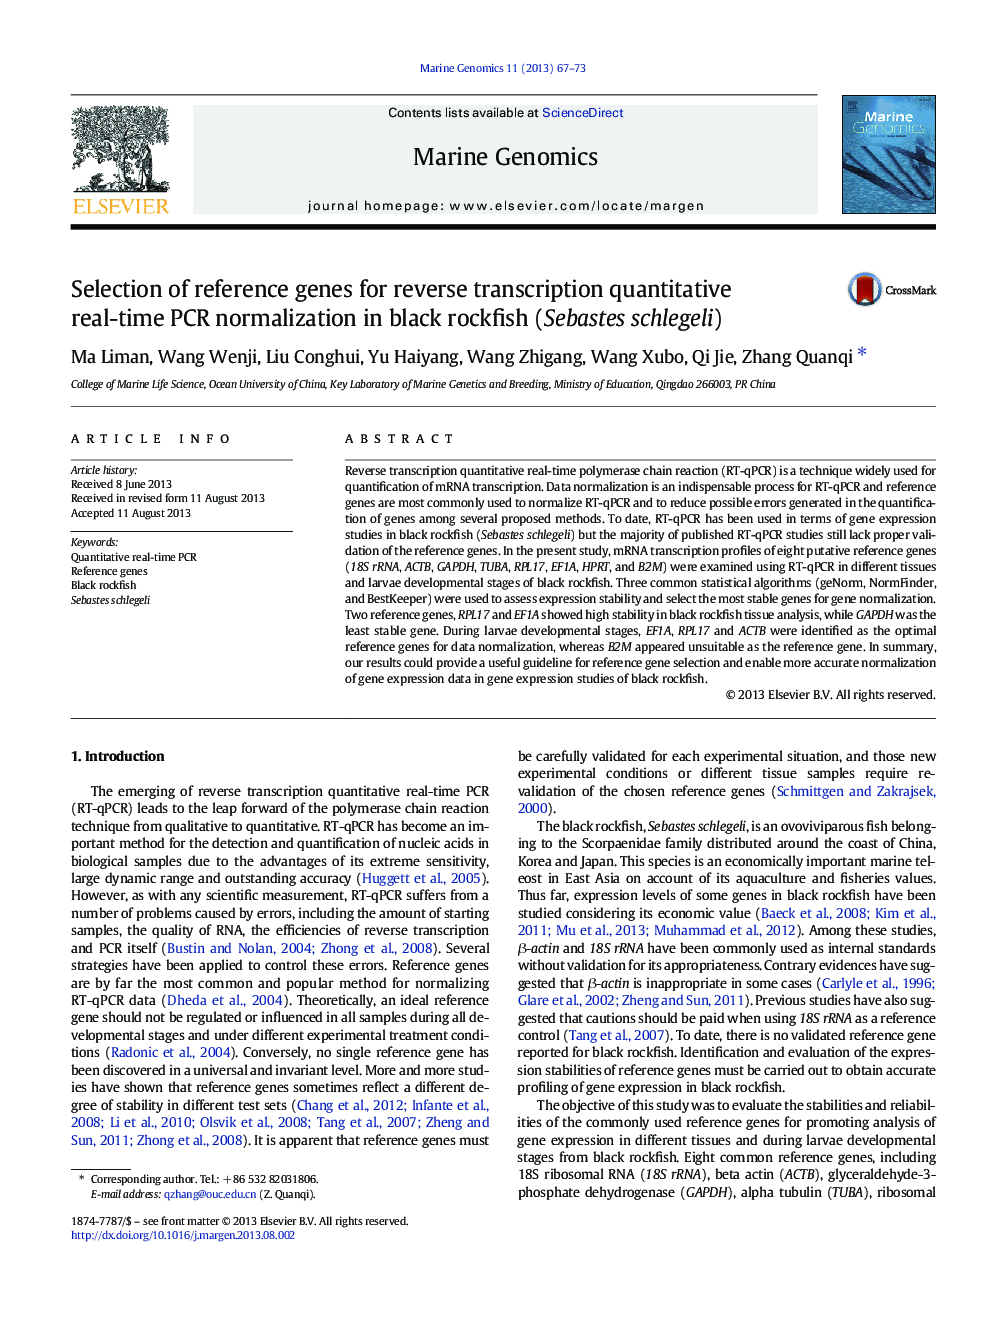 Selection of reference genes for reverse transcription quantitative real-time PCR normalization in black rockfish (Sebastes schlegeli)